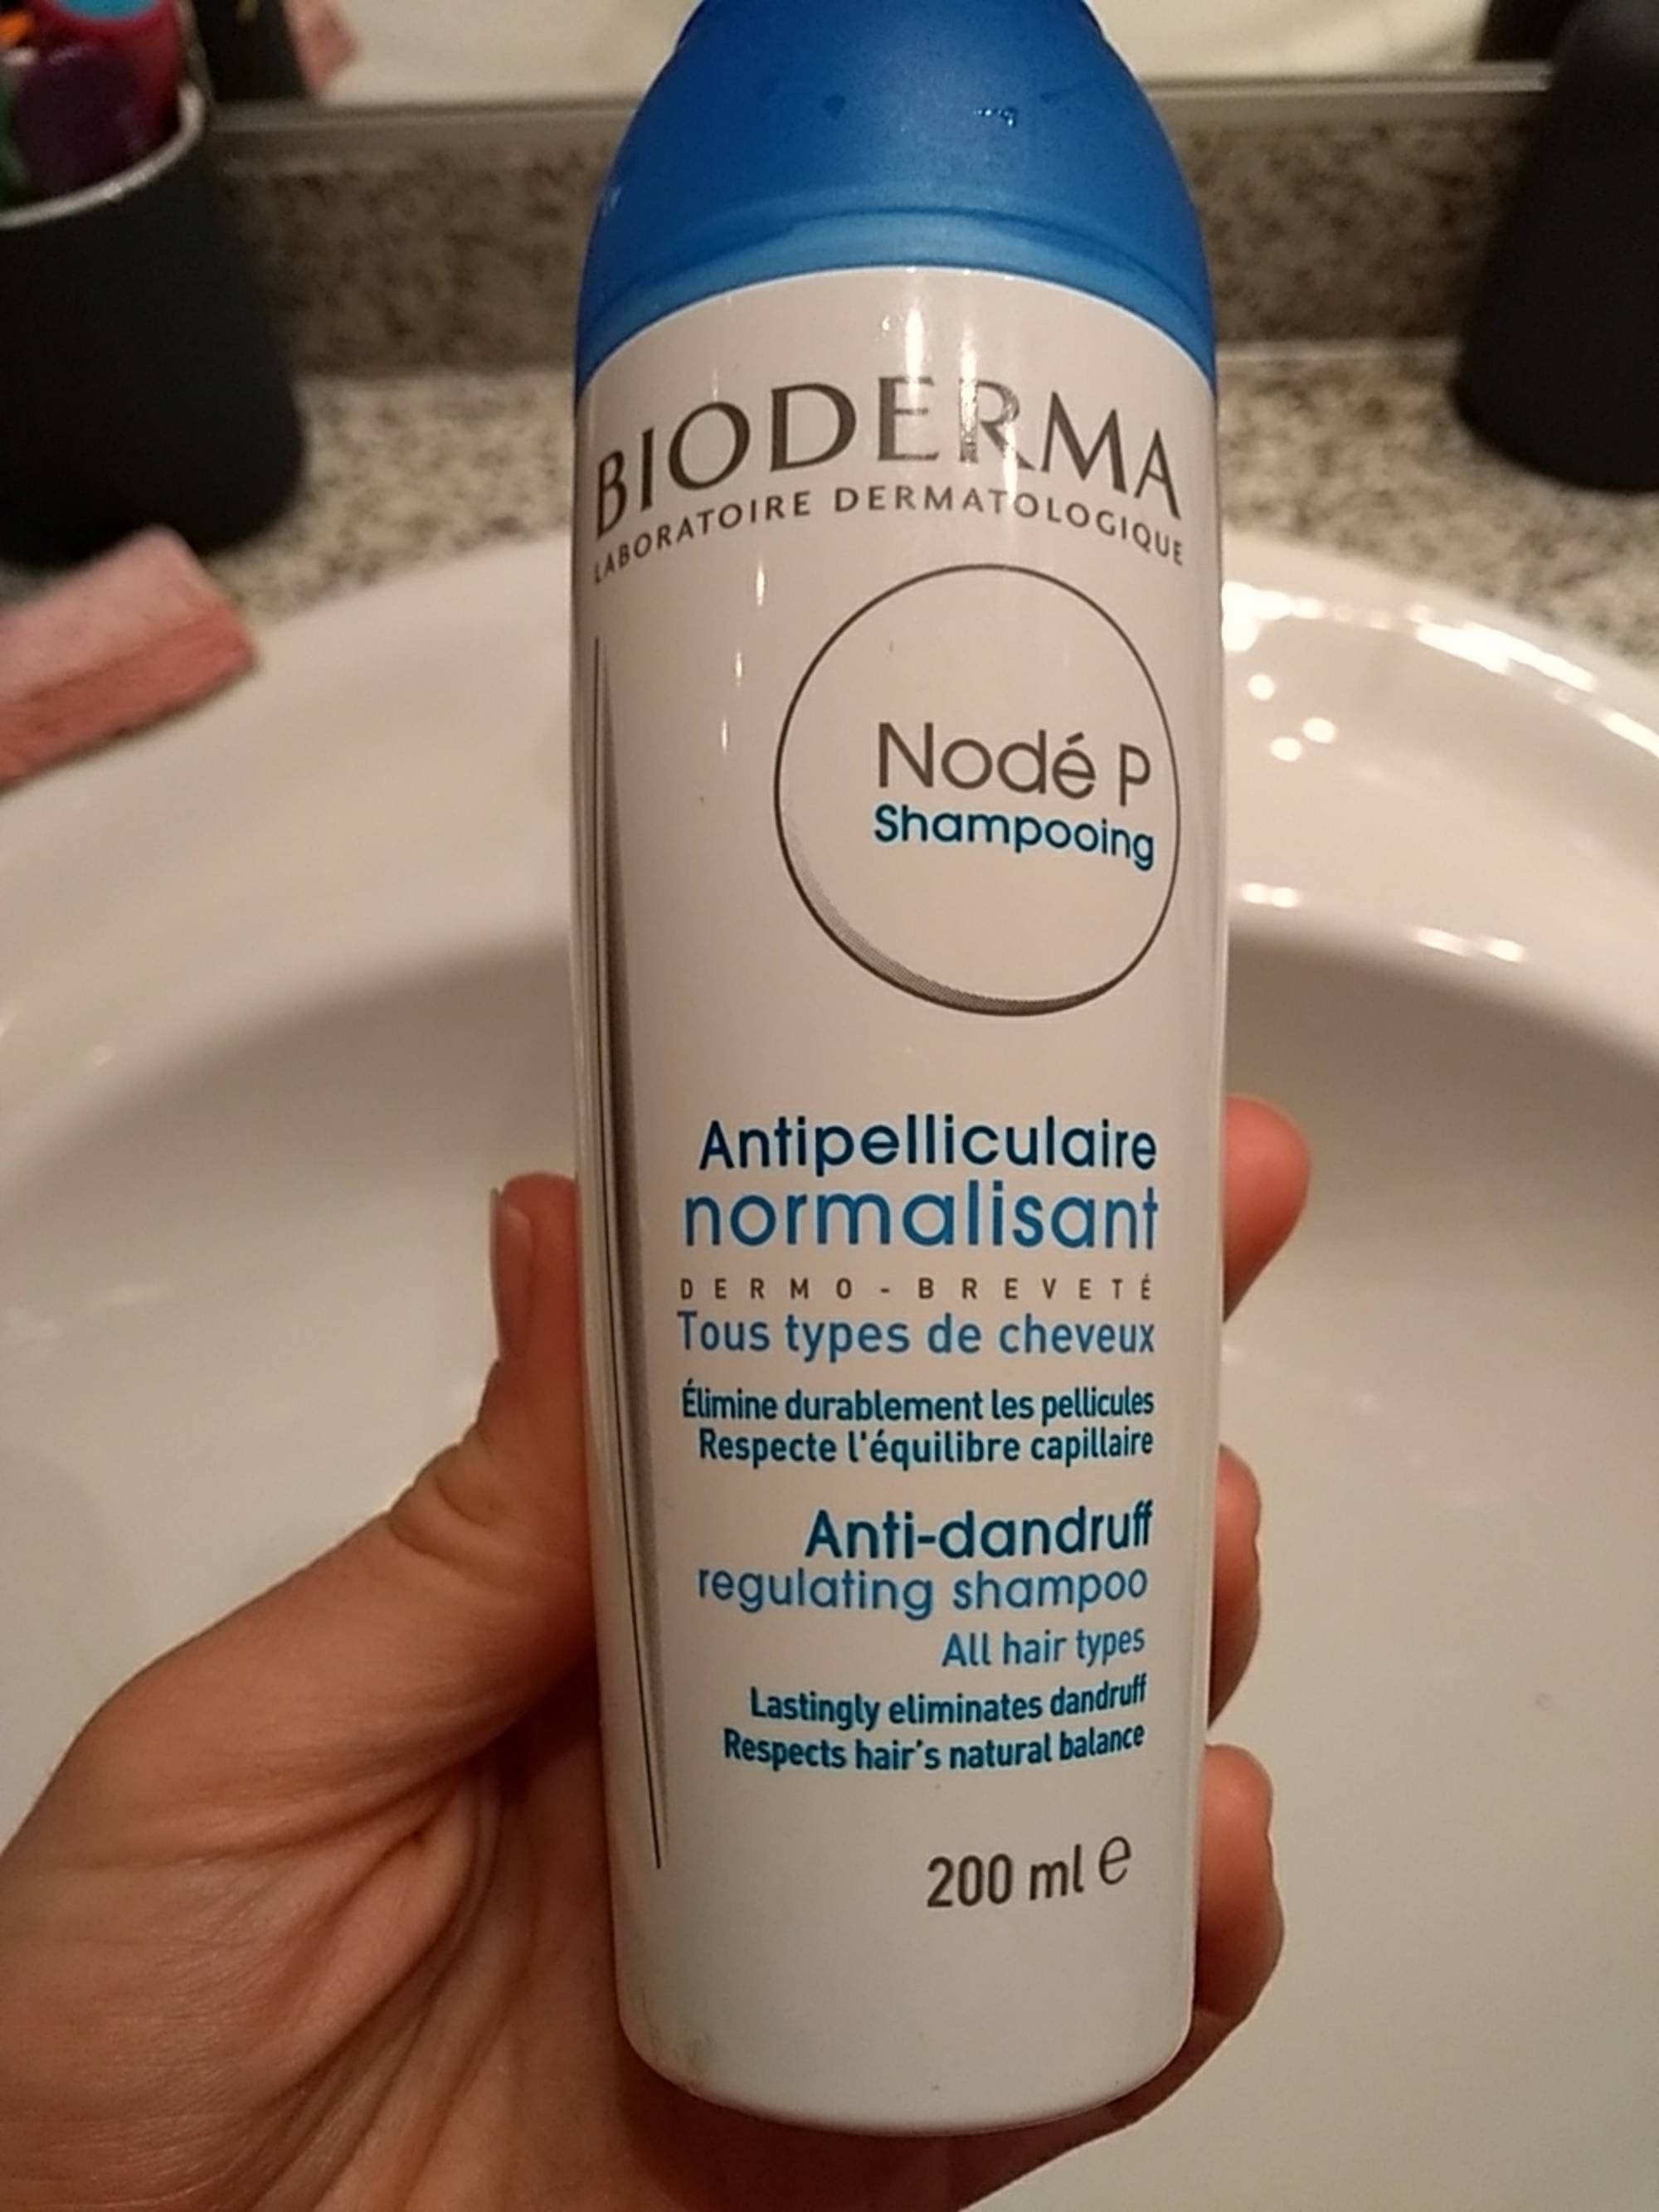 BIODERMA - Nodé P Shampooing - Antipelliculaire normalisant